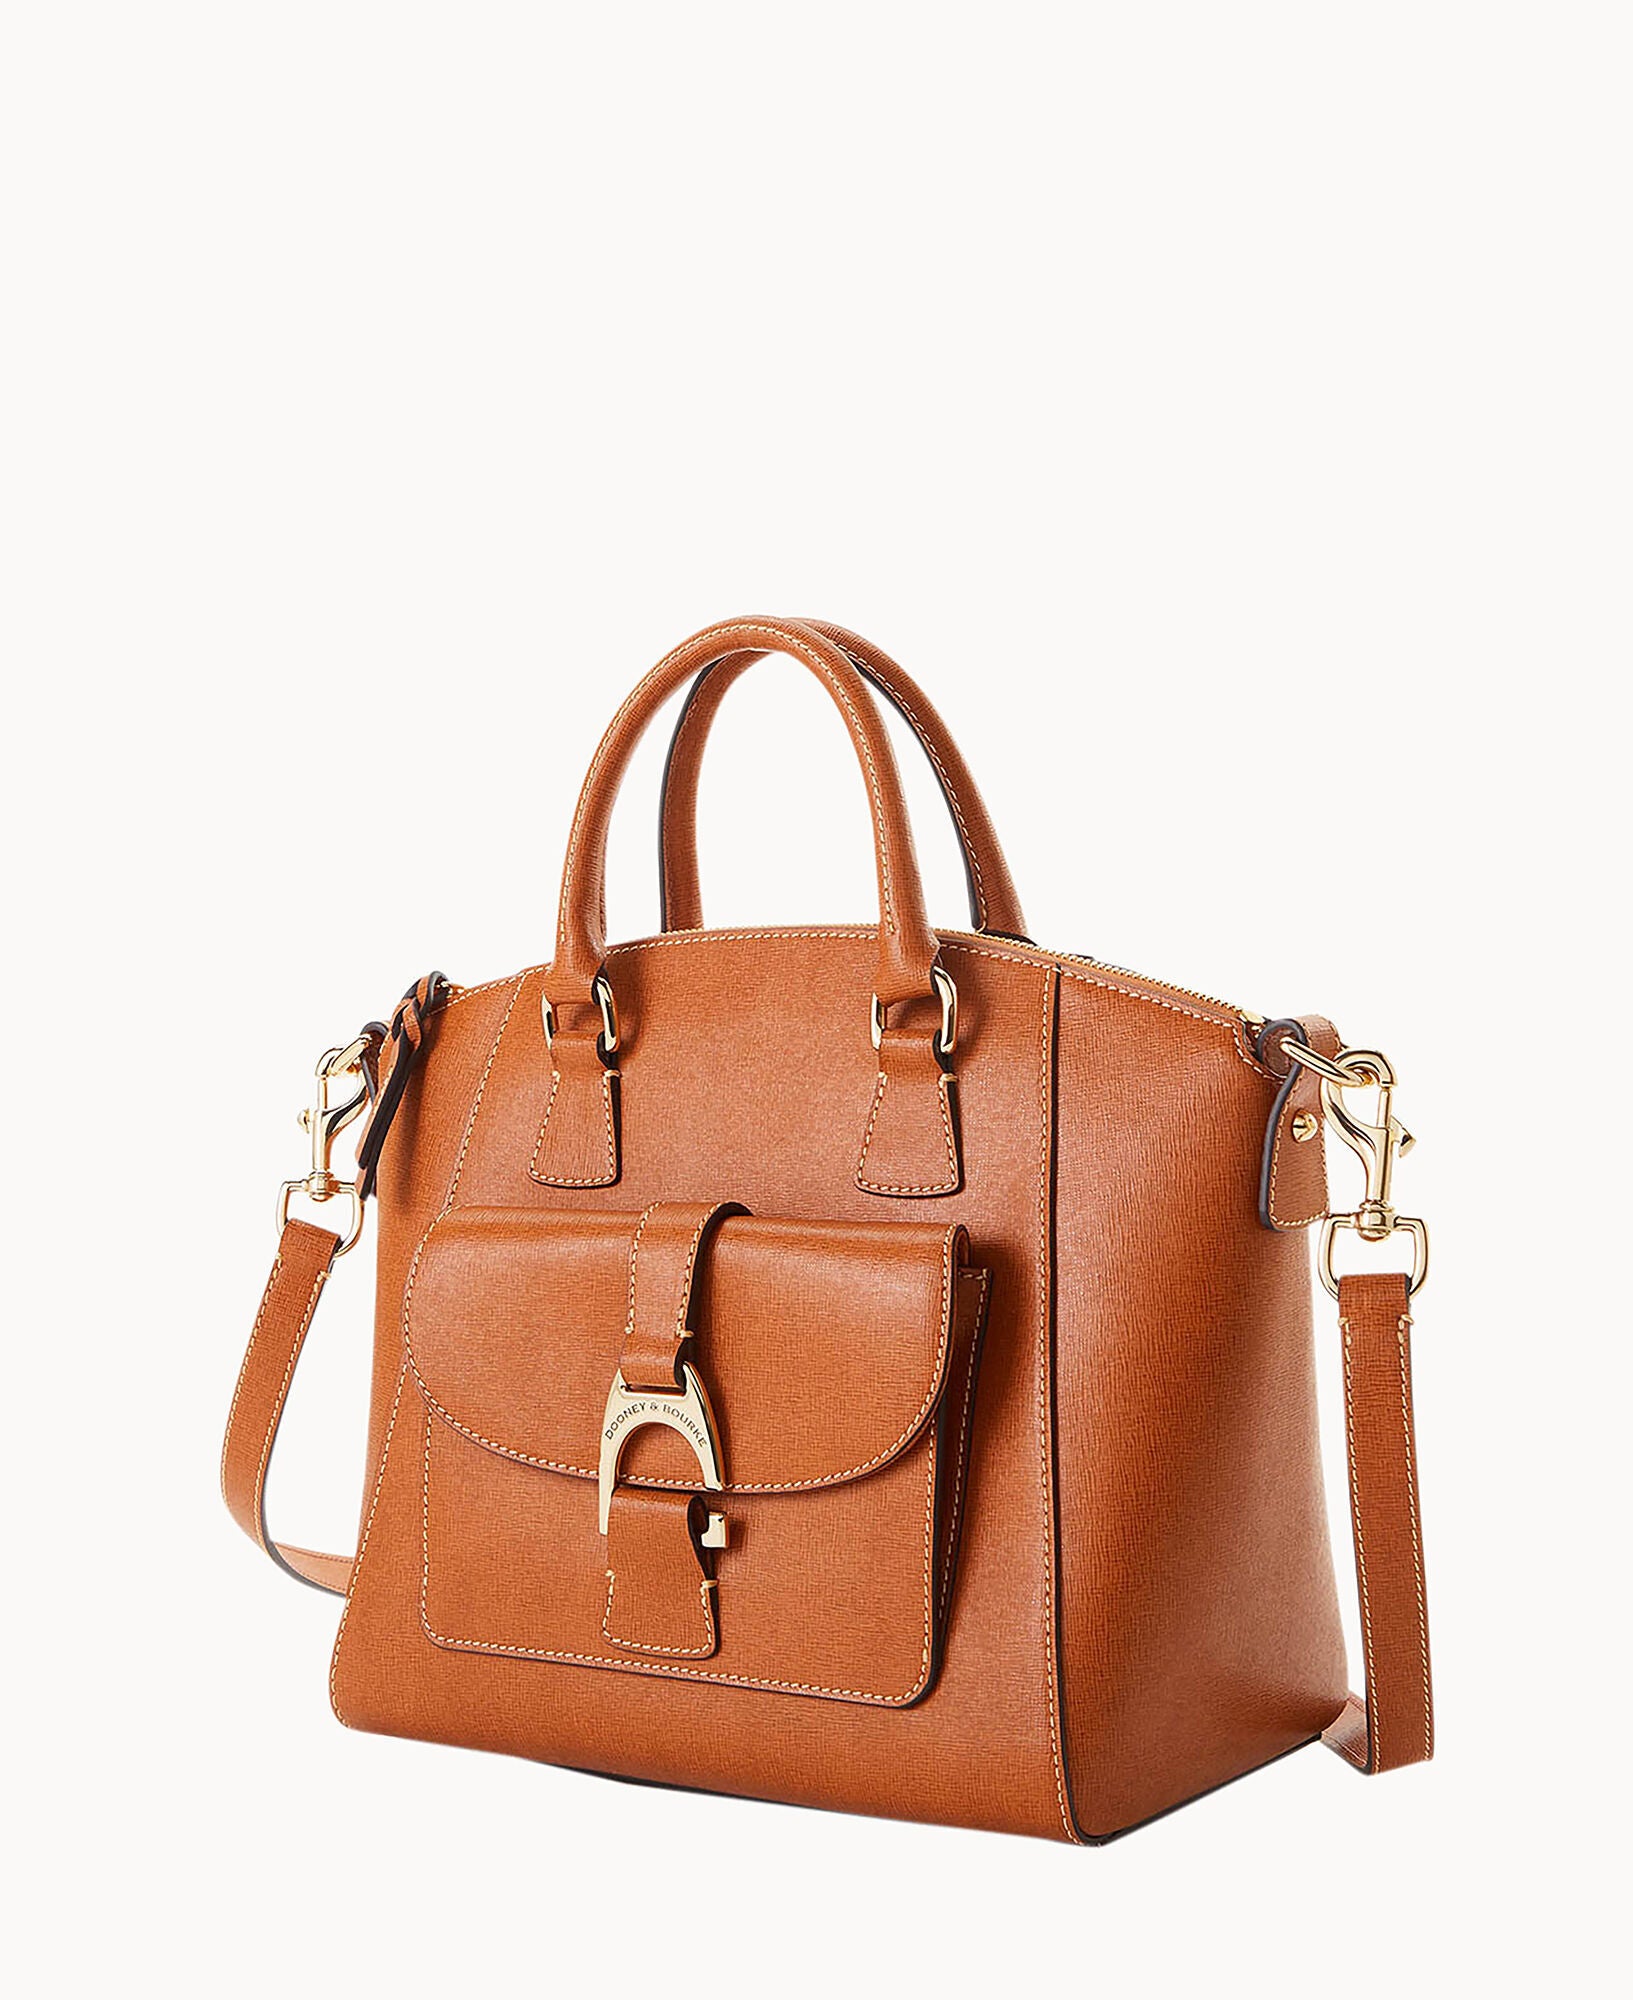 Dooney & Bourke Florentine Large Satchel Handbag